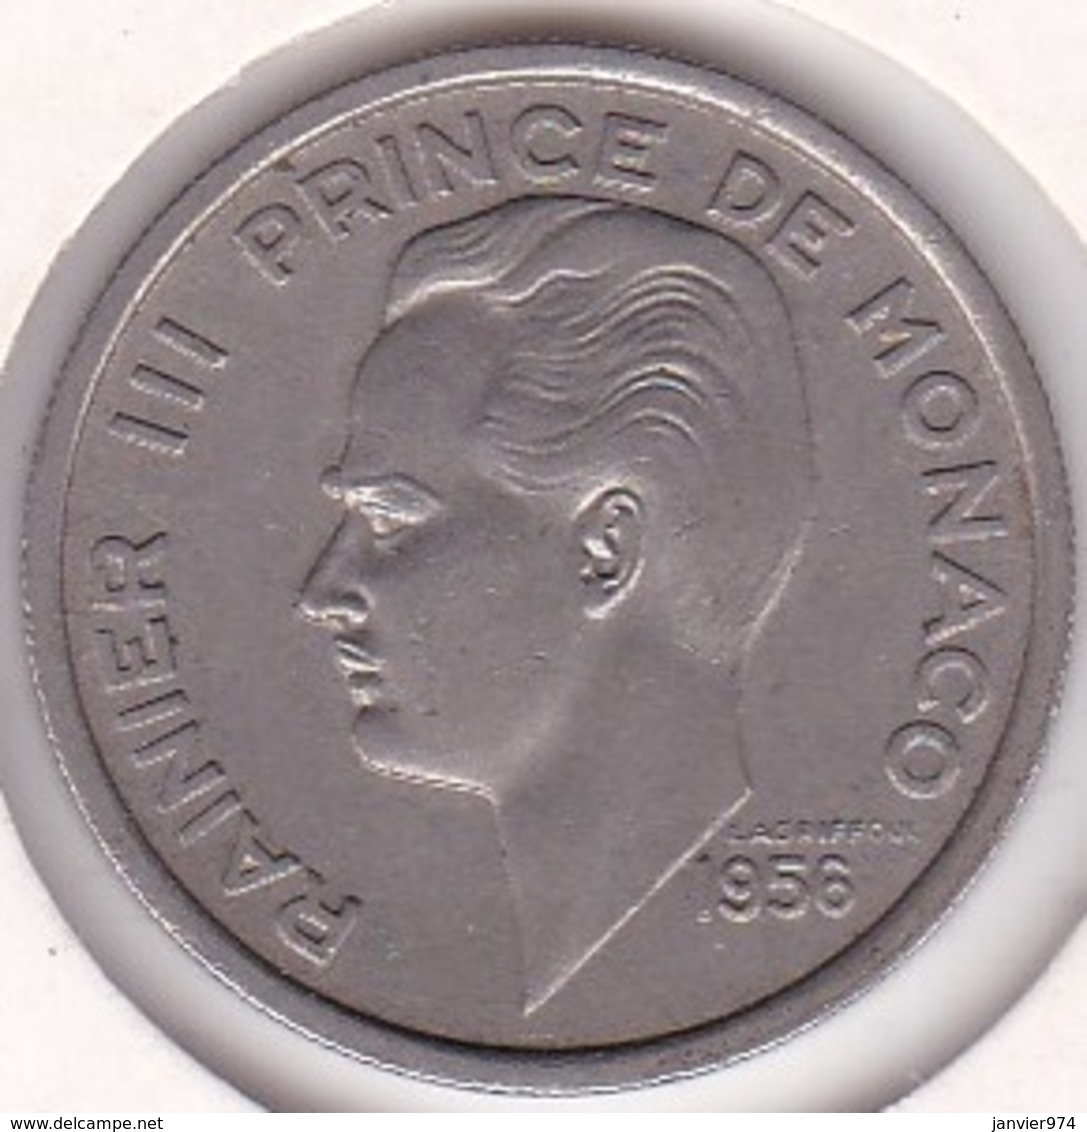 MONACO. 100 FRANCS 1956. RAINIER III - 1949-1956 Old Francs